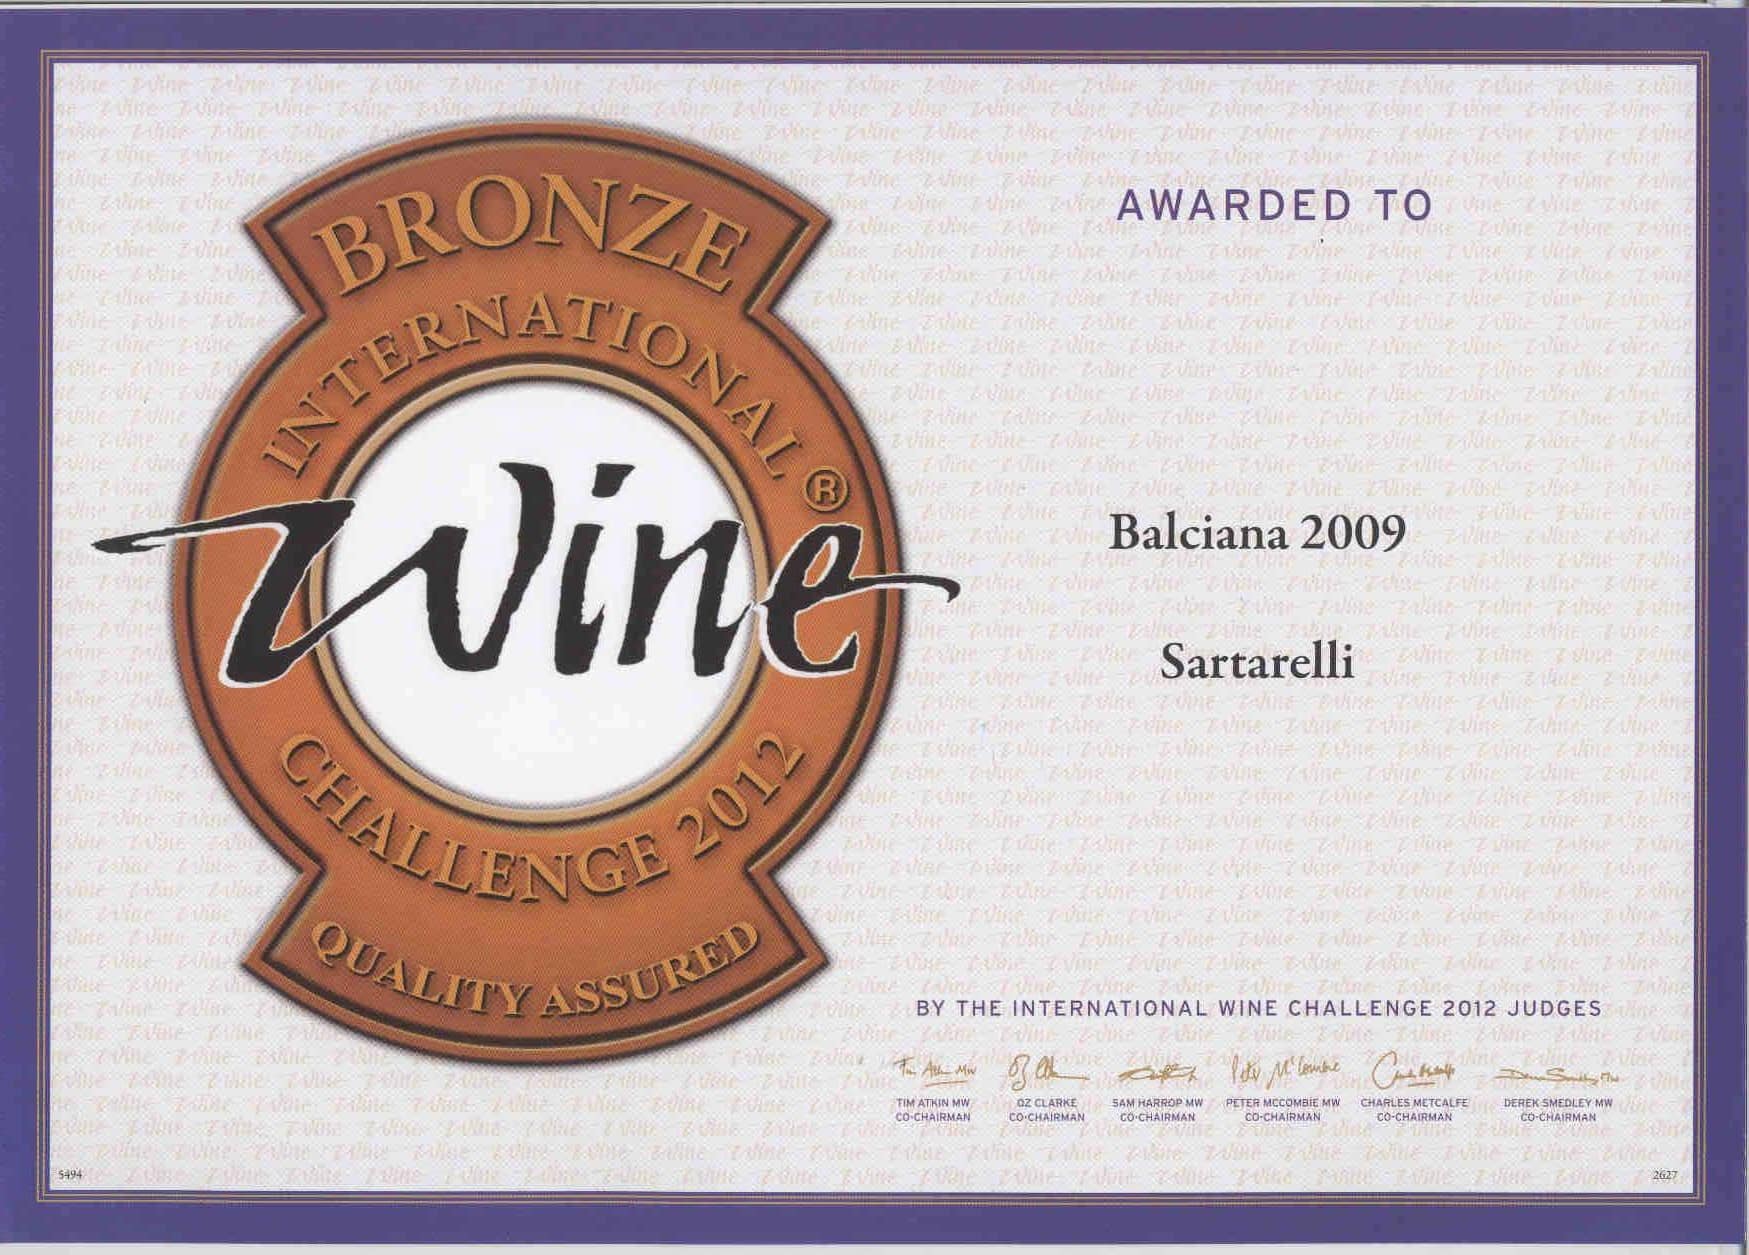 Balciana 2009 - Bronze Medal - International Wine Challenge 2012